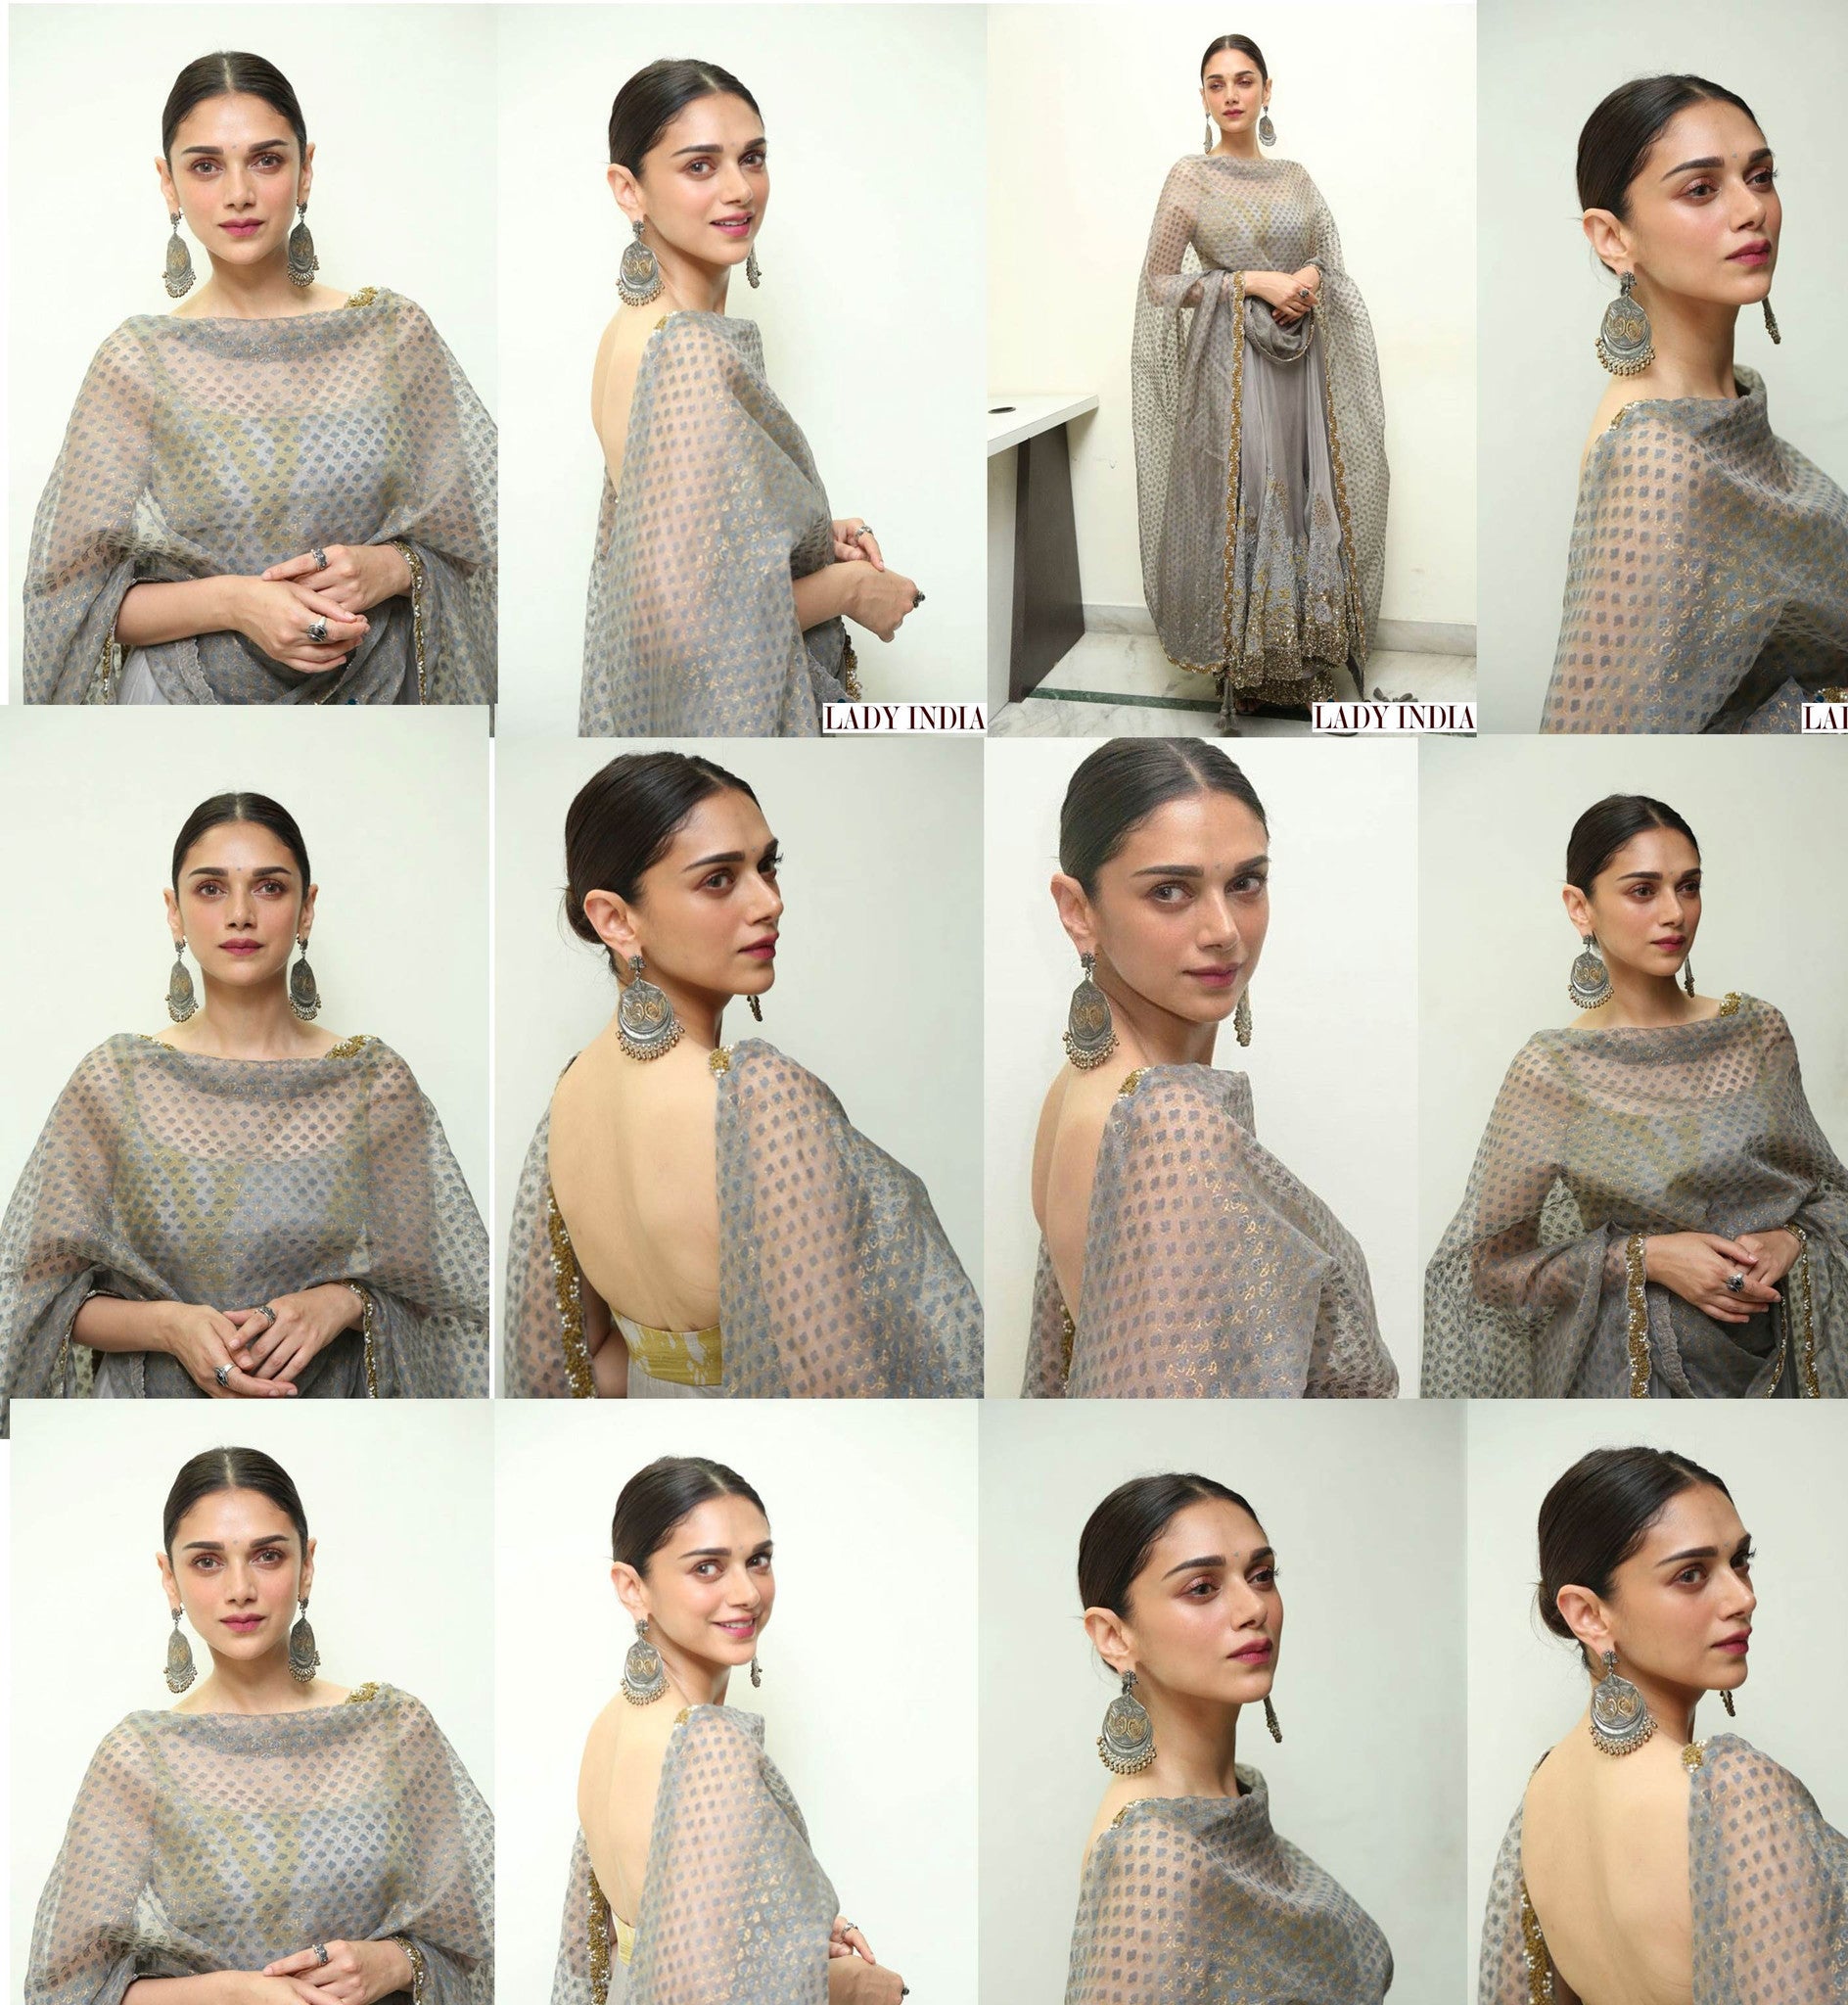 Aditi Rao Hydari in Nikita Mhaisalkar's Designer Indian Ethnic Wear during promotions of her upcoming film, 'Kaatru Veliyidai